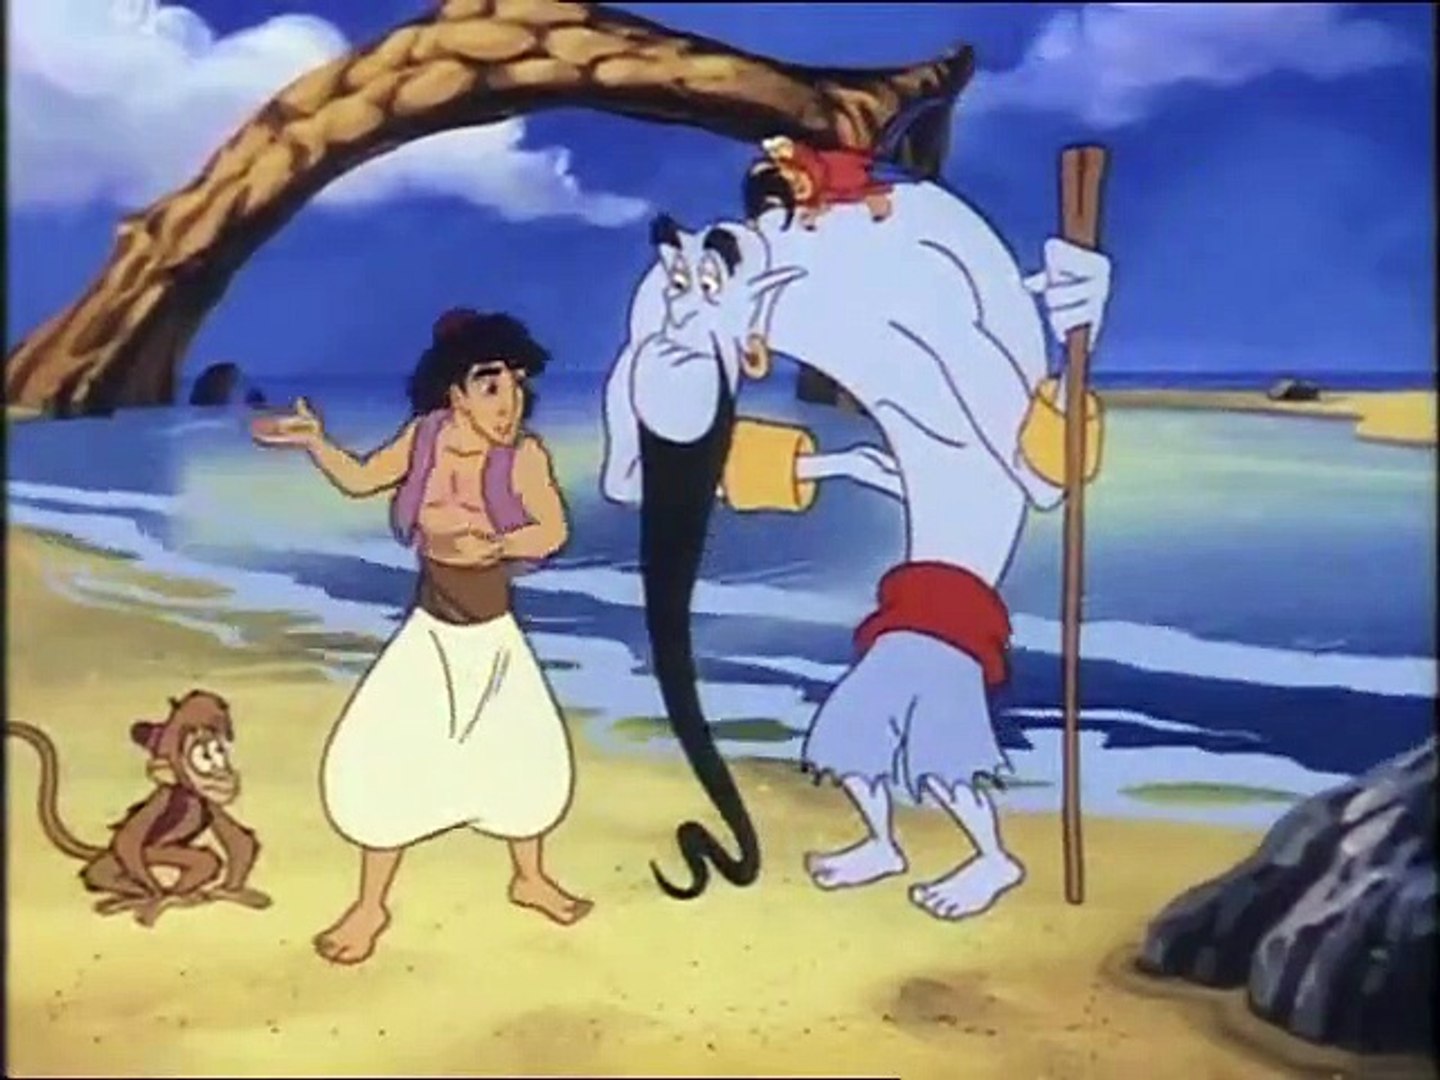 Aladdin S02E028 Shark Treatment